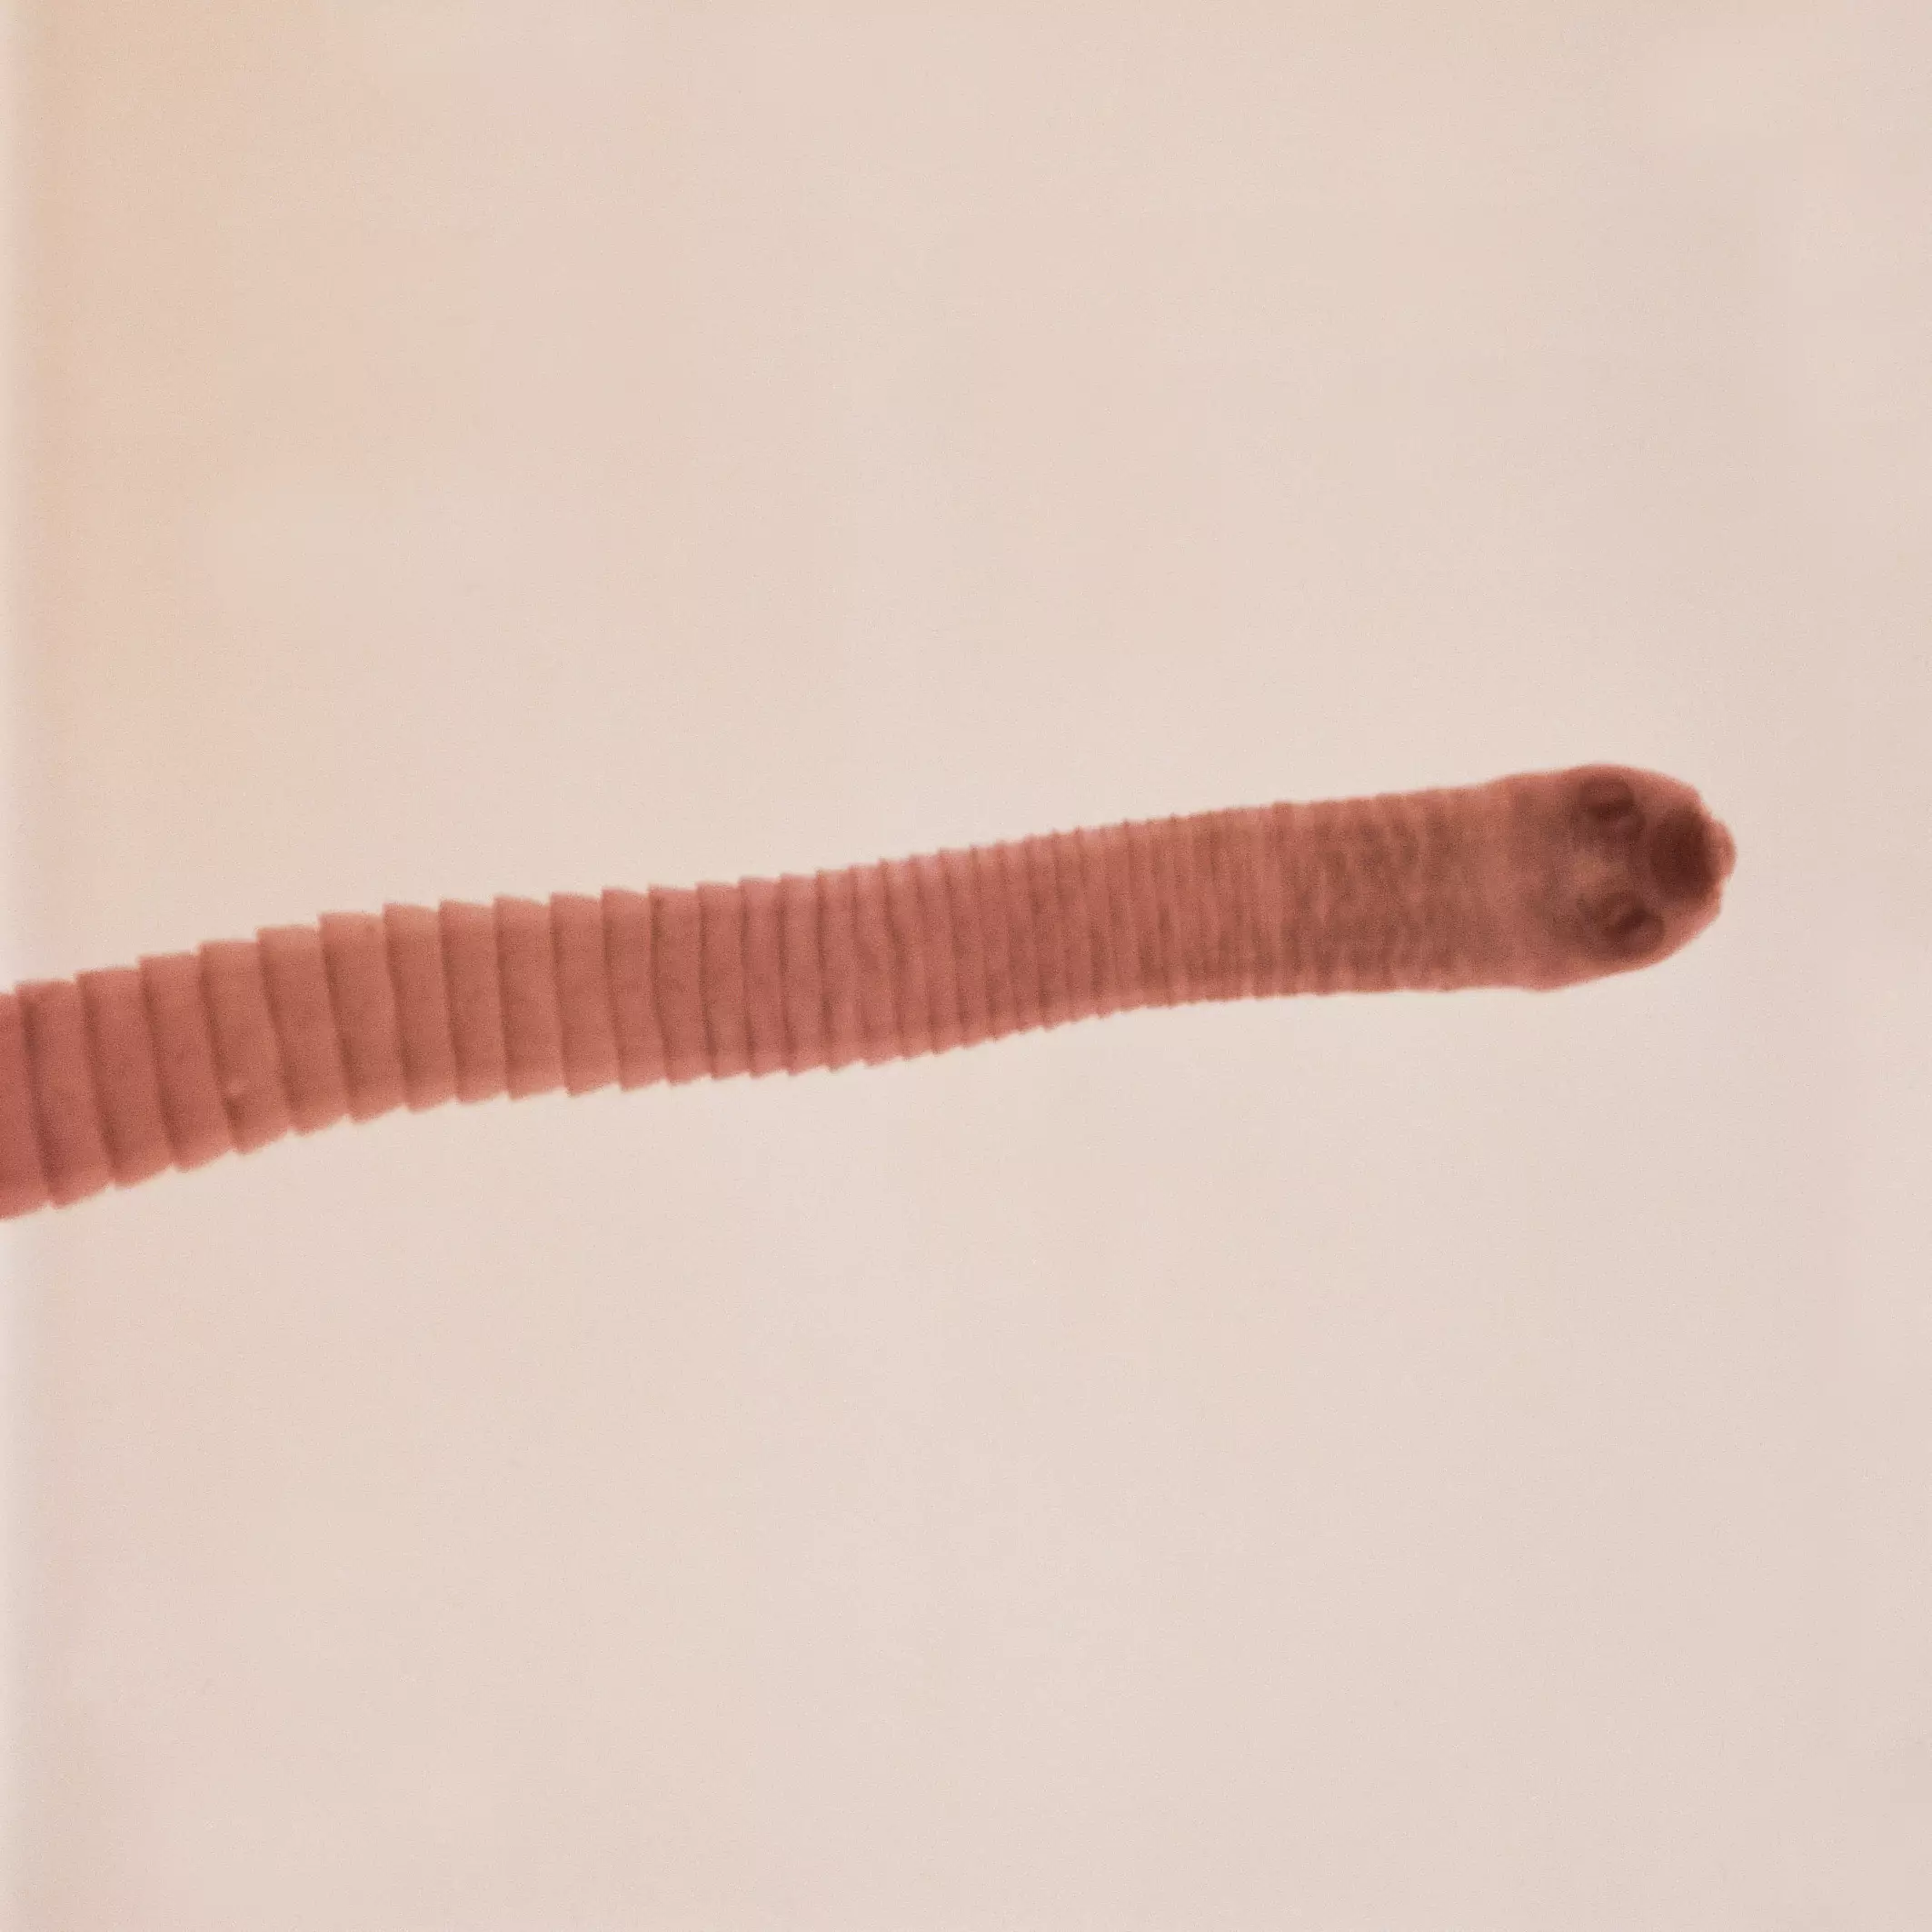 A close up of a tapeworm.